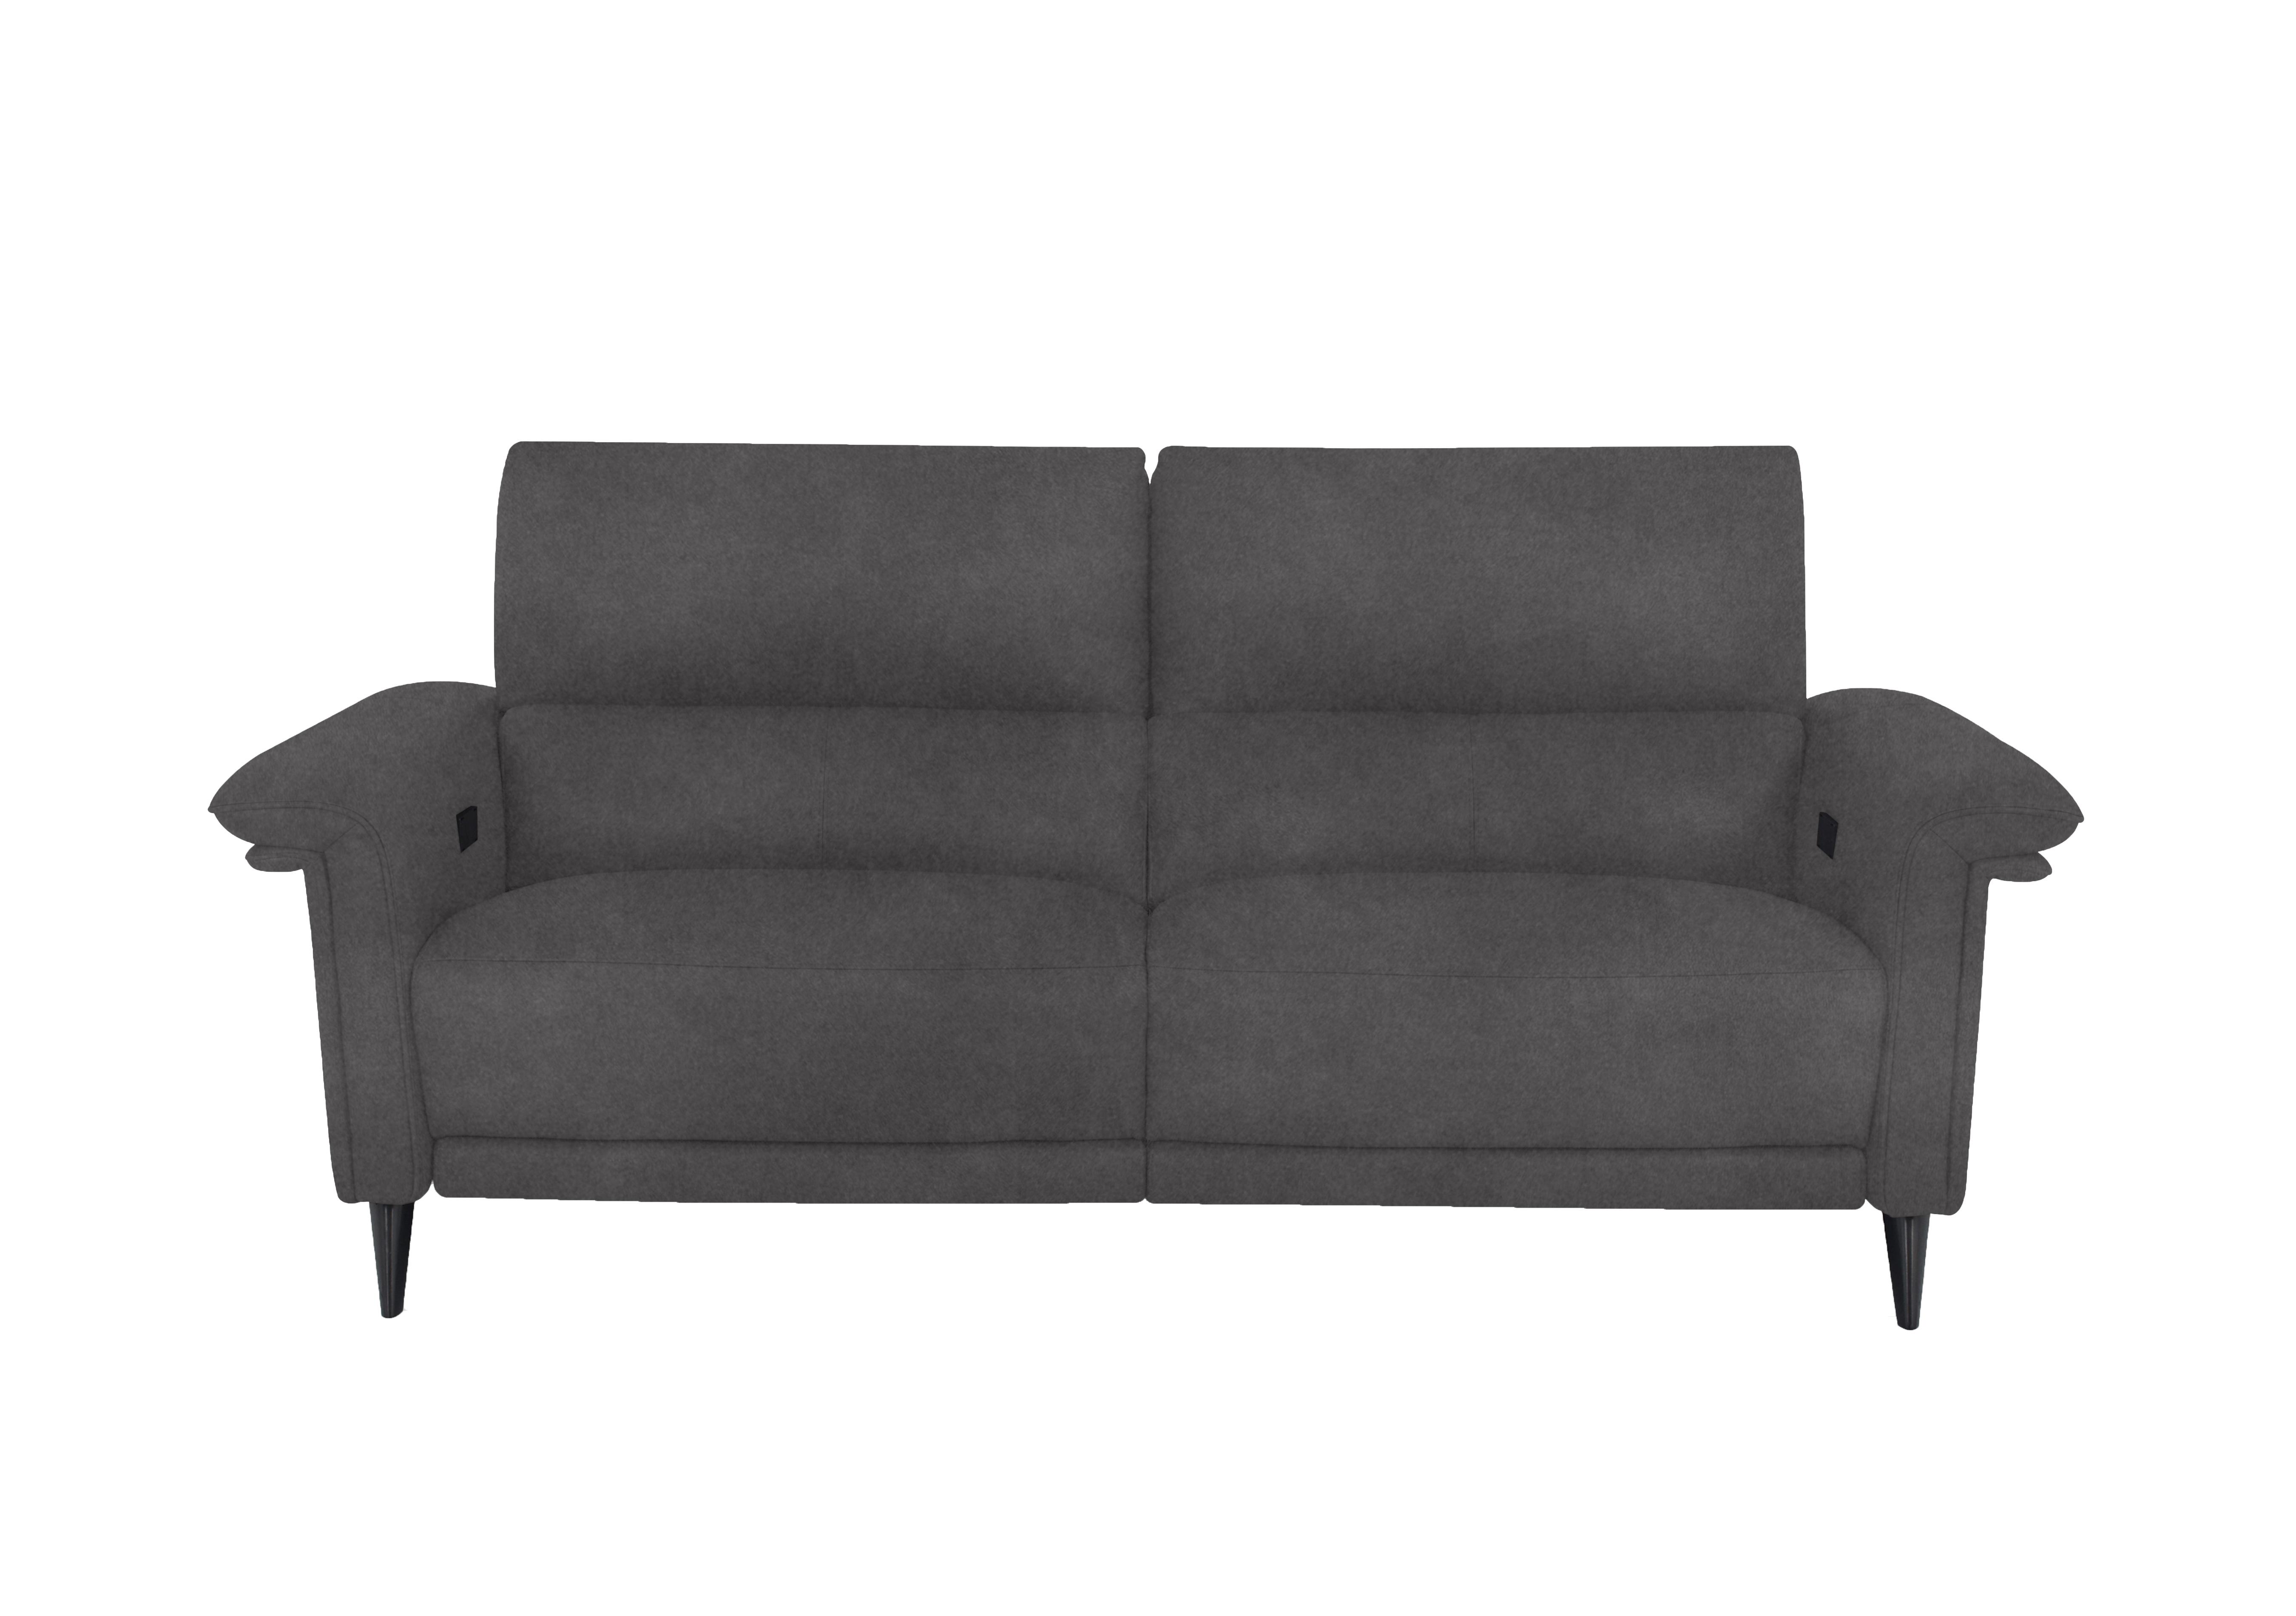 Huxley 3 Seater Fabric Sofa in Fab-Meg-R20 Pewter on Furniture Village